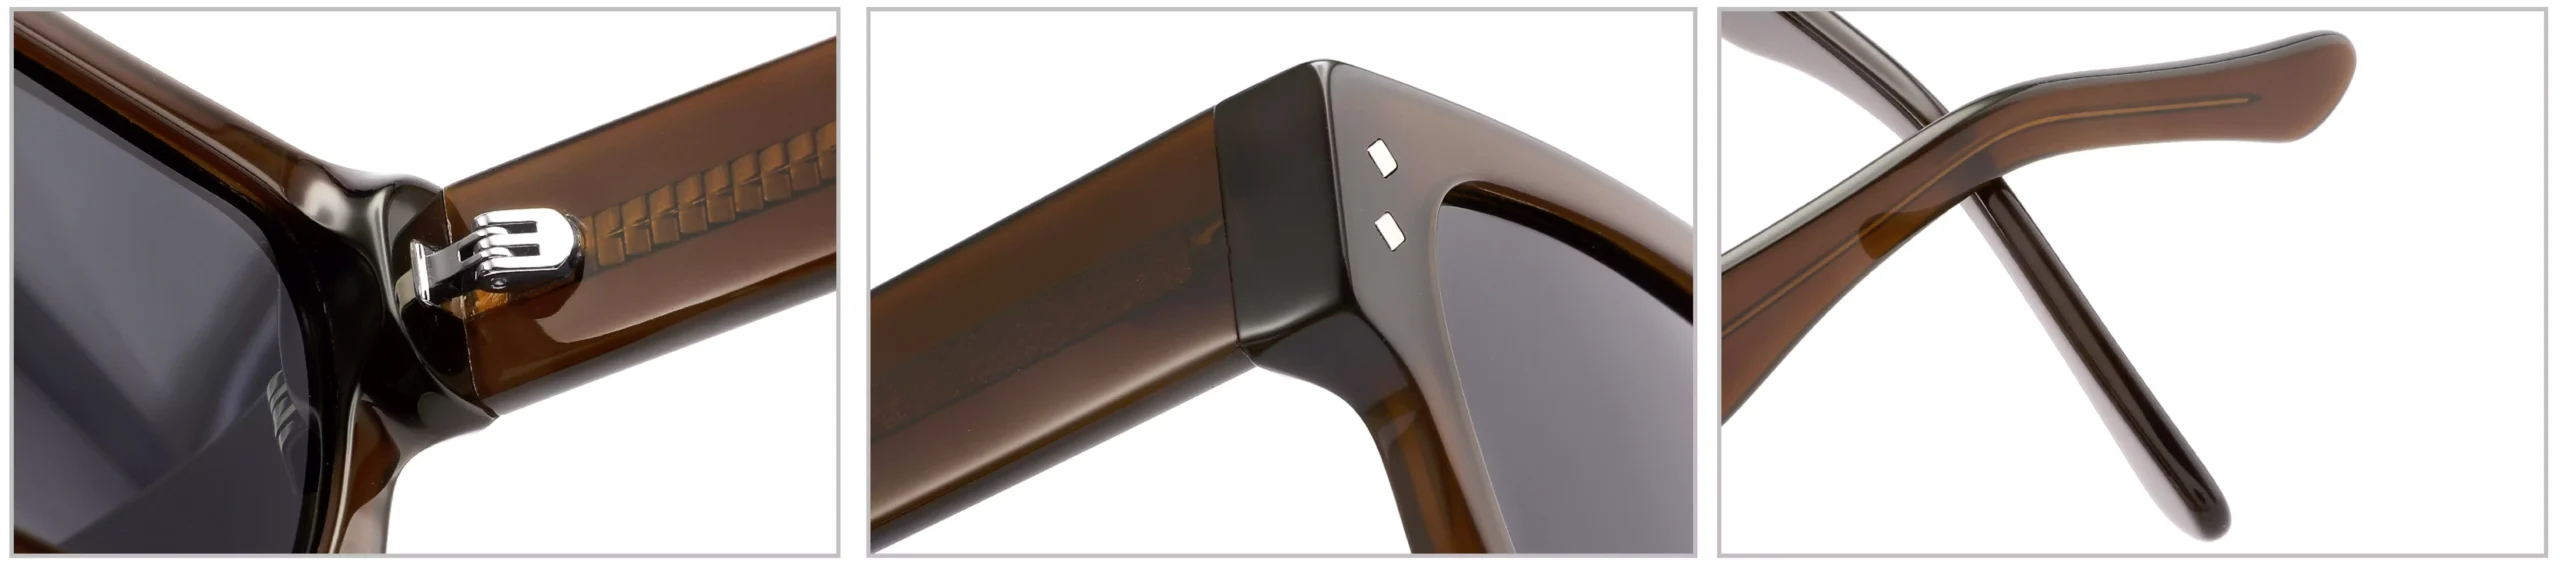 Sunglasses FG1581T Detail Shooting, Size, Model, Front Display, Black Square, Diamond Rivets